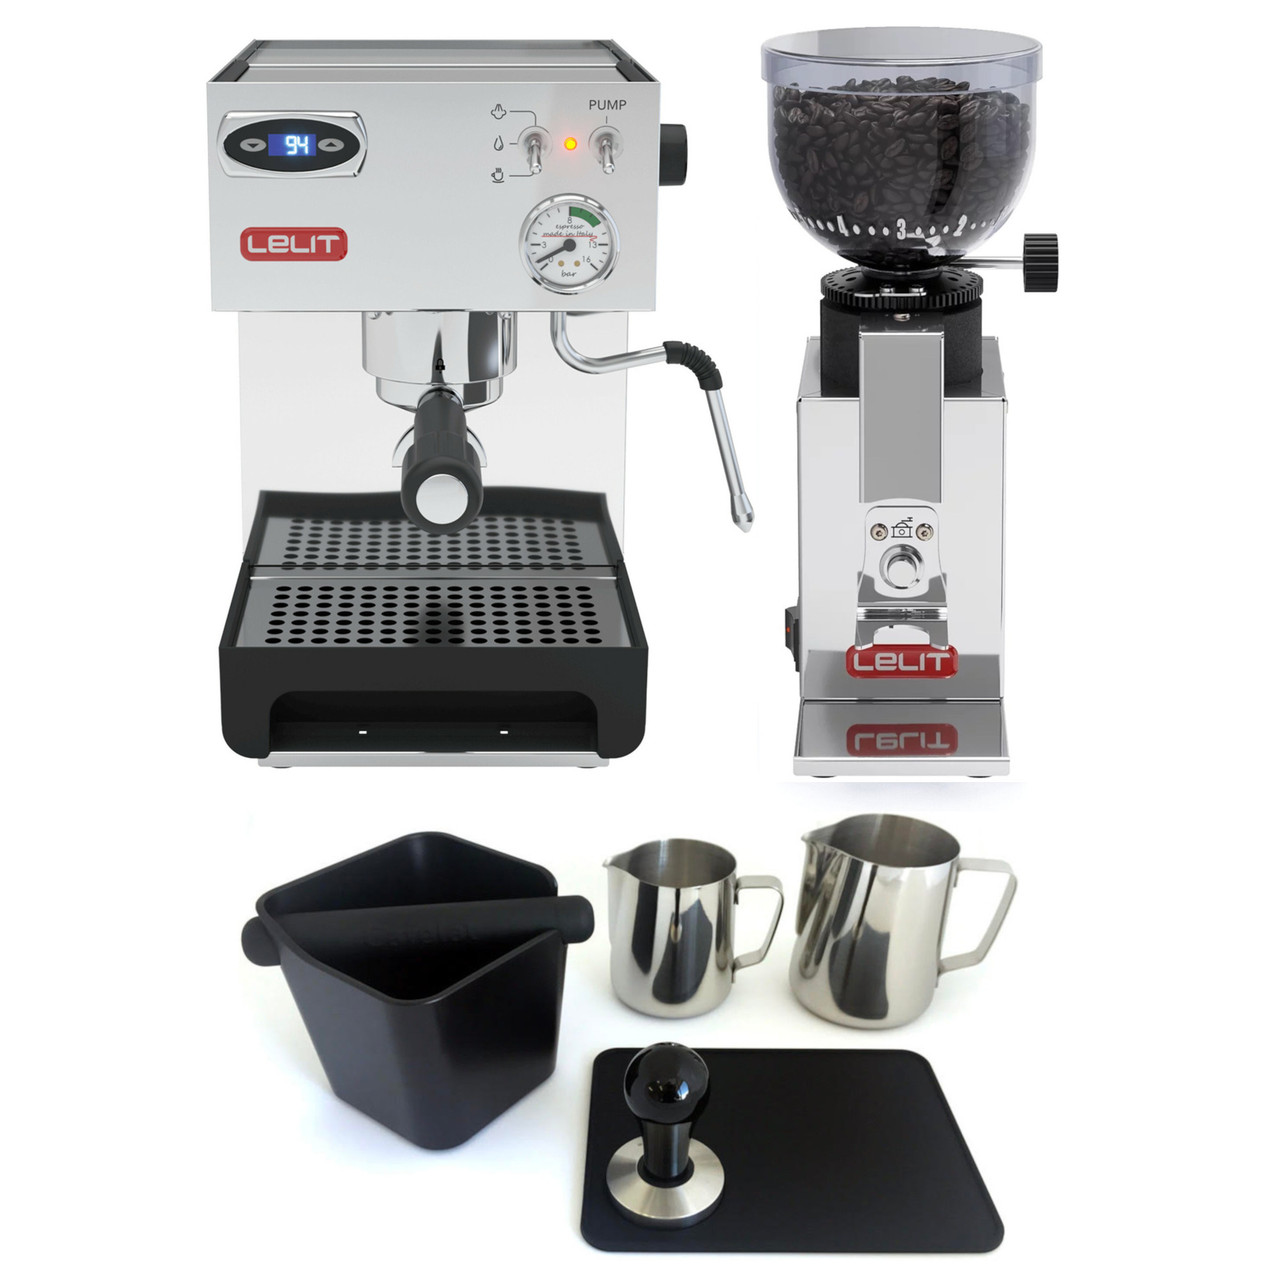 Lelit Anna PL41TEM - home lever coffee machine